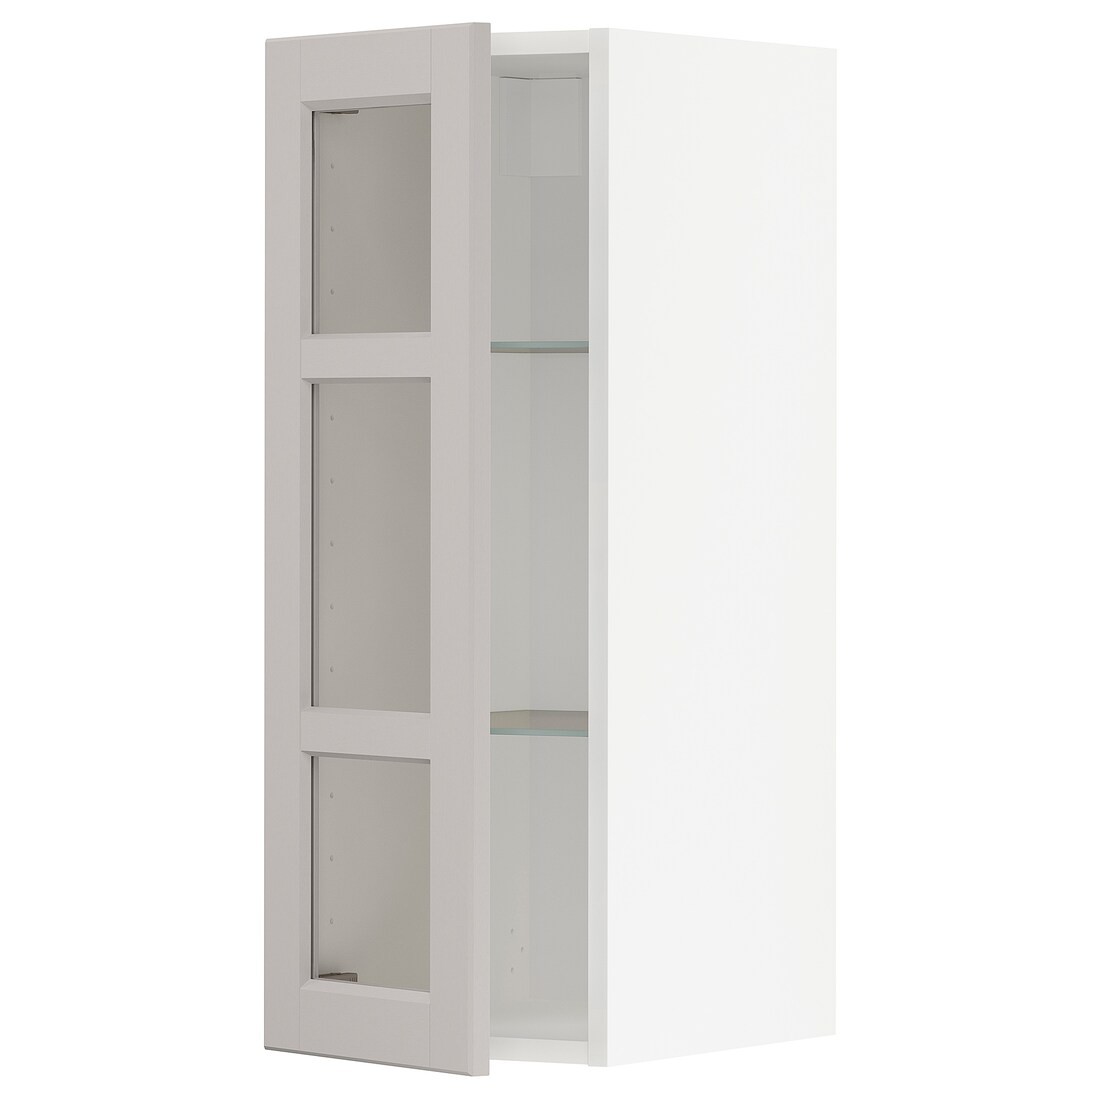 IKEA METOD МЕТОД Навесной шкаф, белый / Lerhyttan светло-серый, 30x80 см 49456282 | 494.562.82